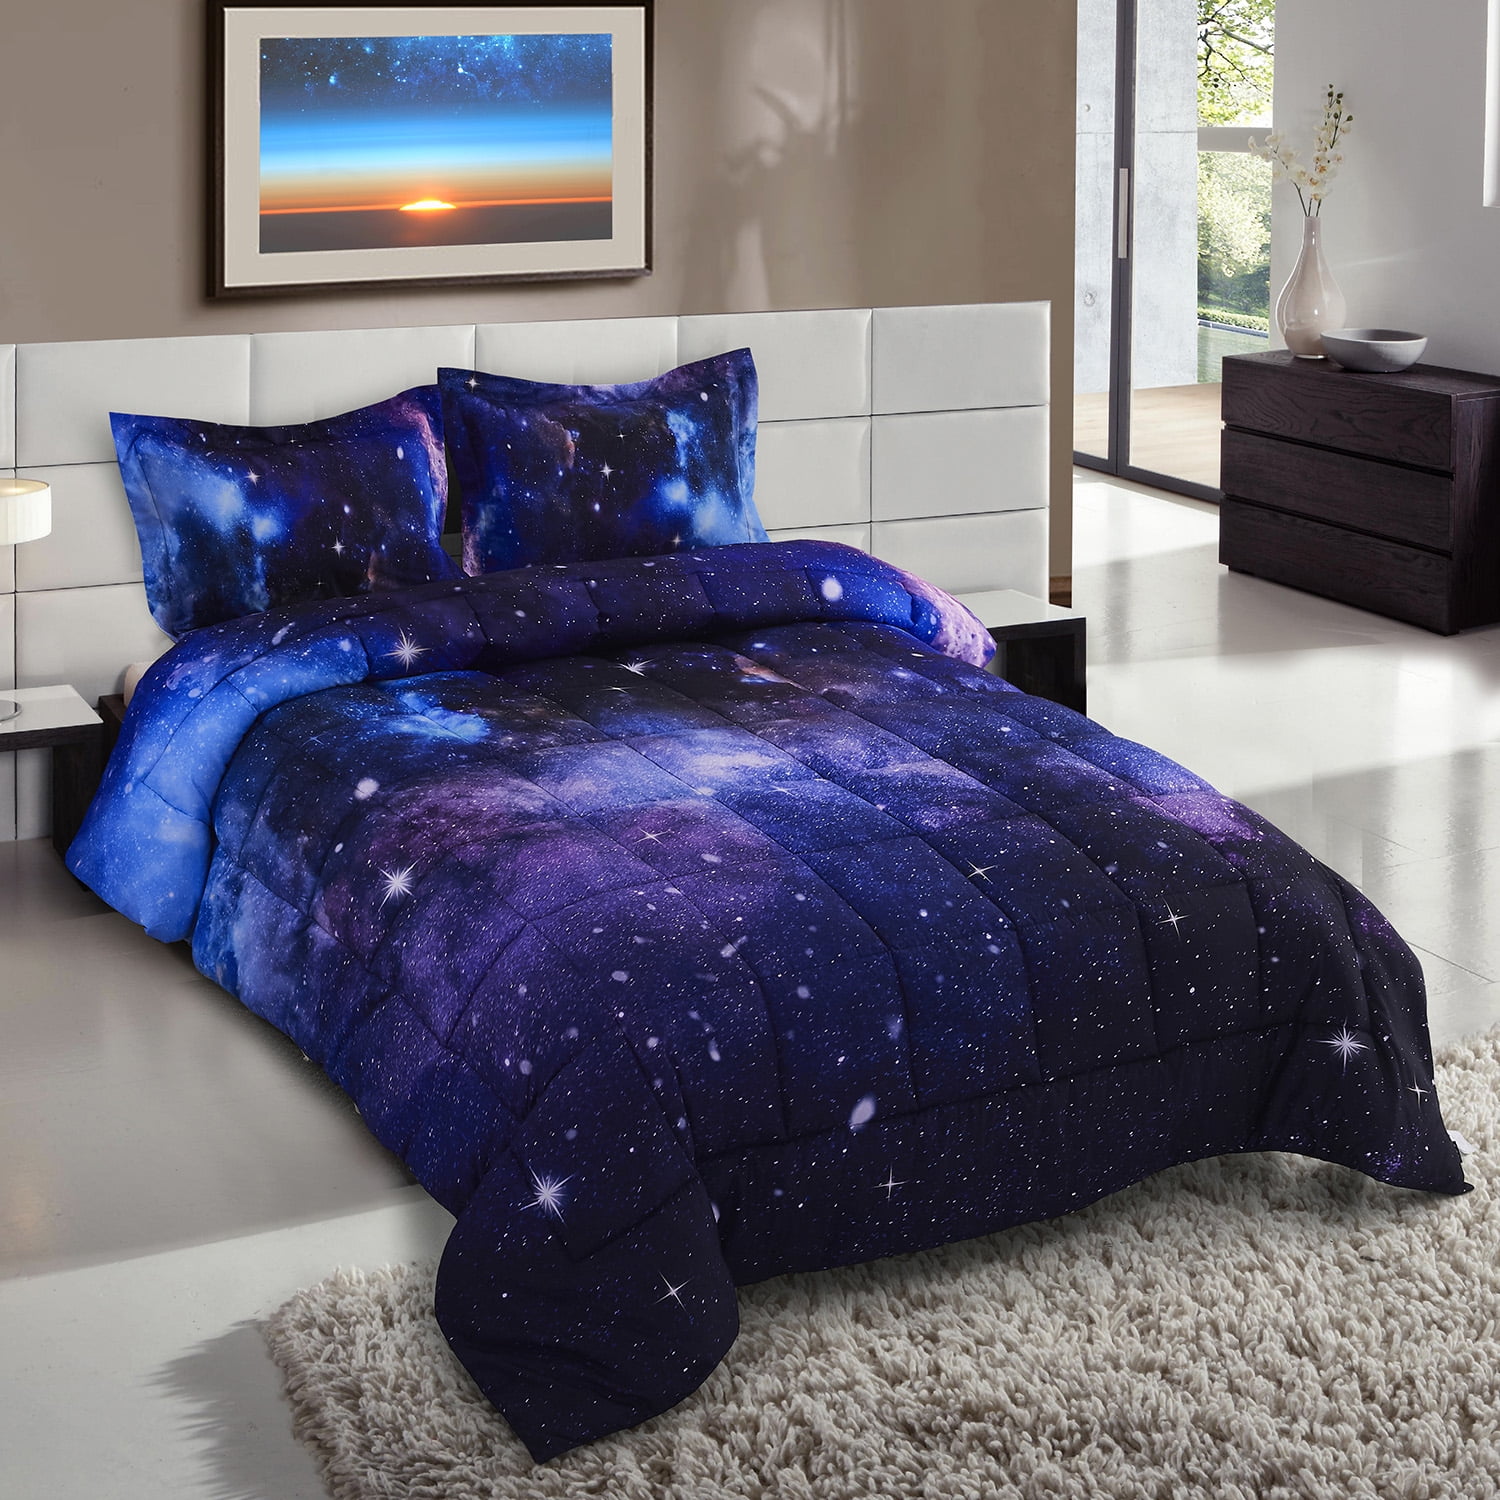 3D Super Mario Galaxy Bedding Set Duvet Cover Pillowcase Comforter/Quilt Cover